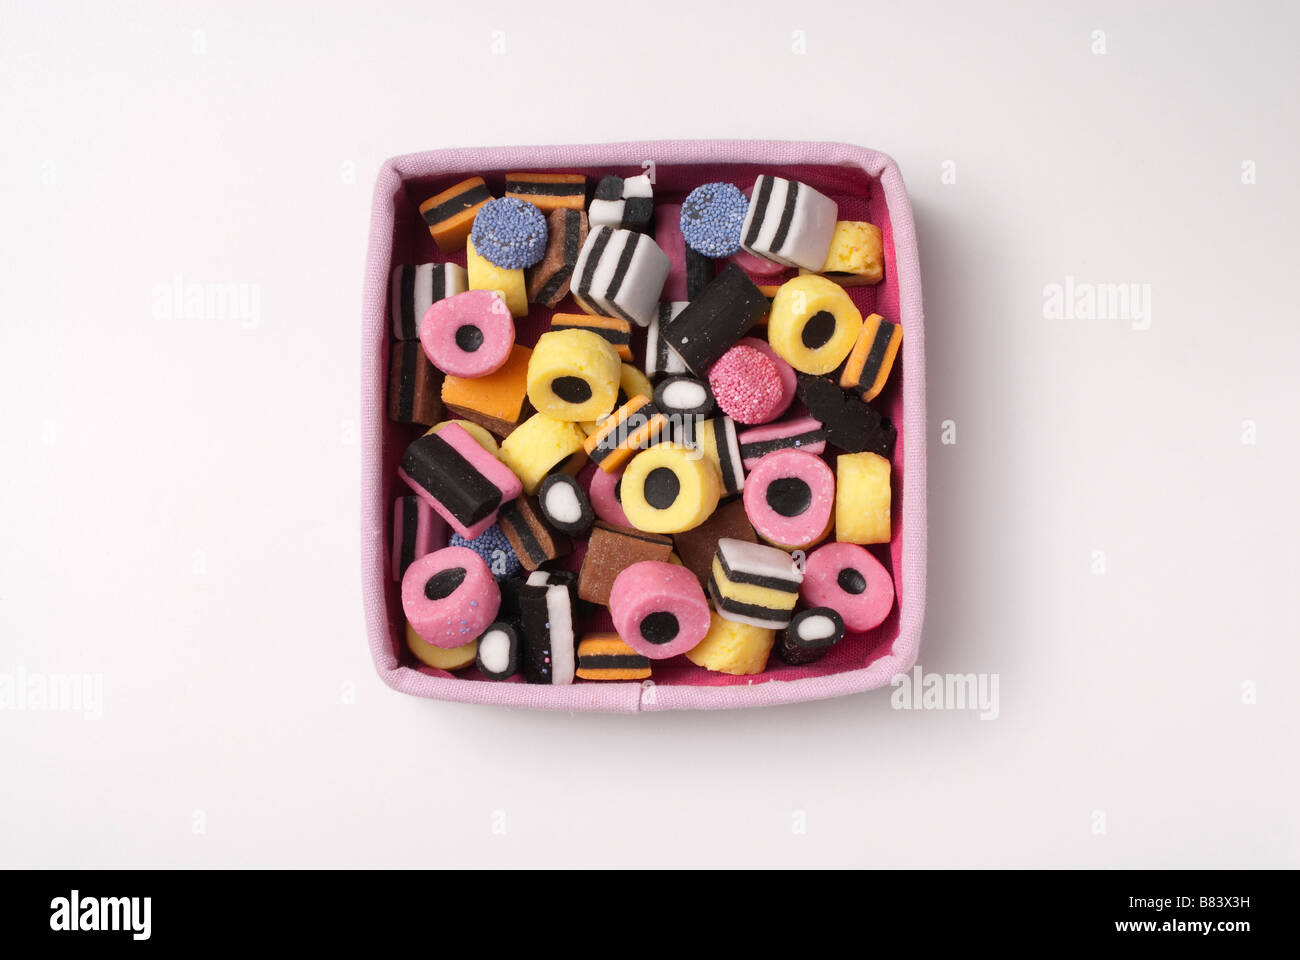 Liquorice allsorts sweets in pink box Stock Photo